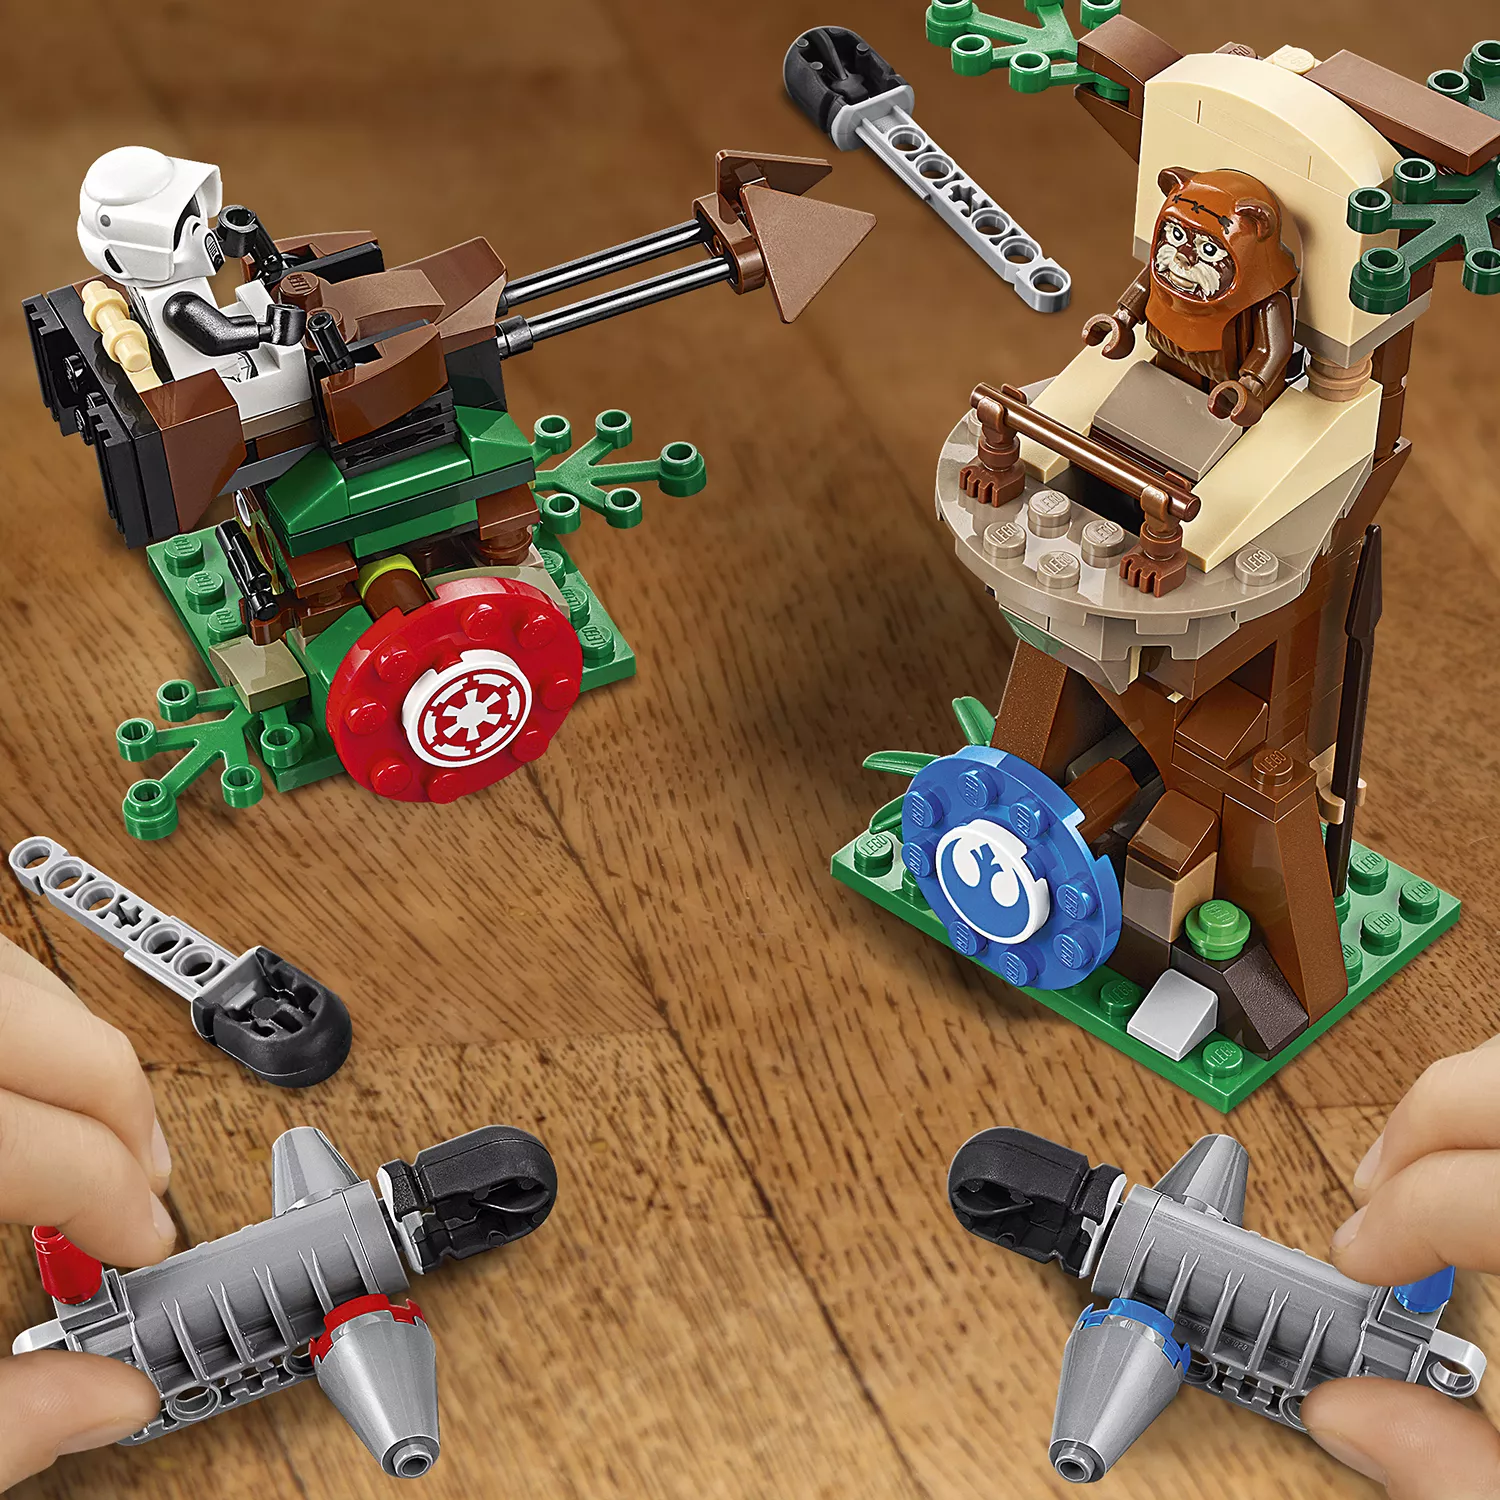 LEGO Star Wars Action Battle Endor Attacke